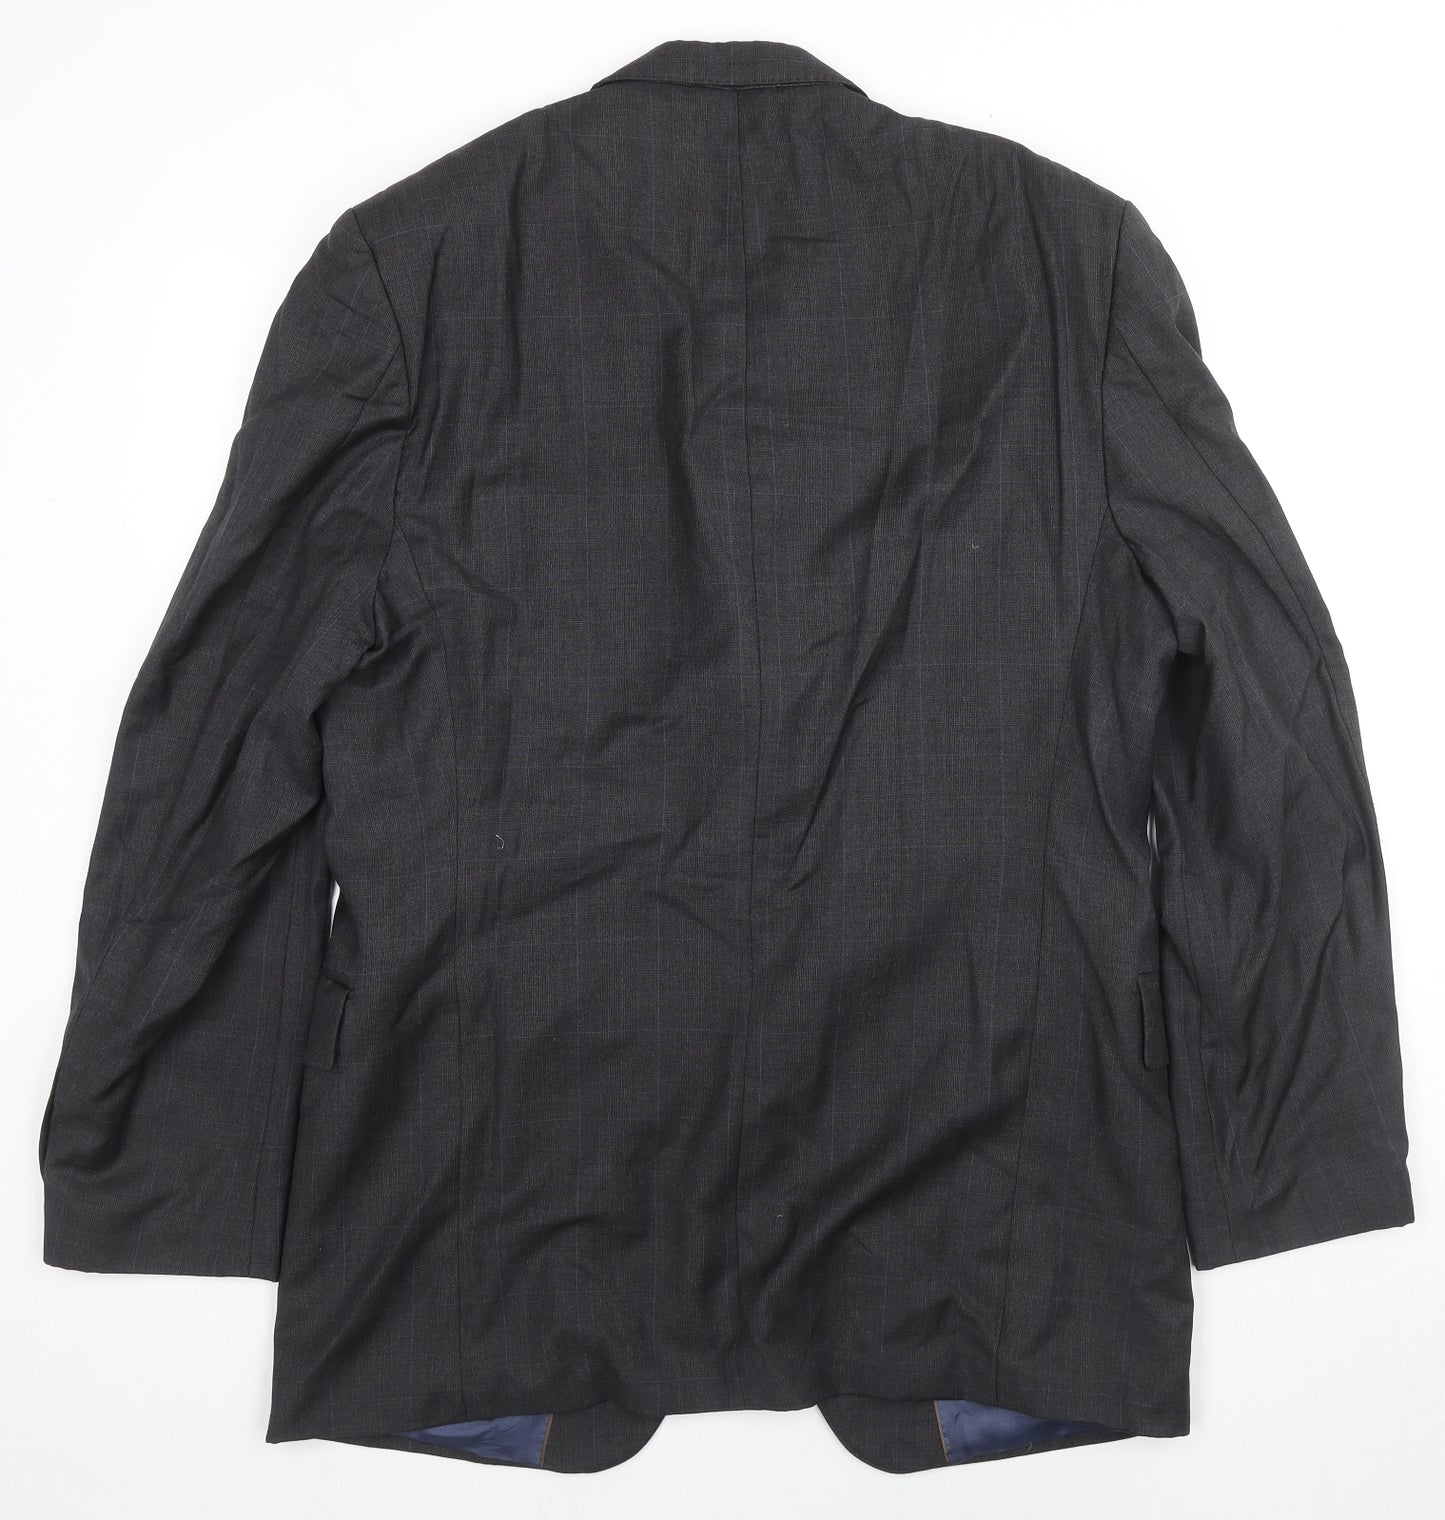 Austin Reed Mens Grey Wool Jacket Suit Jacket Size 46 Regular